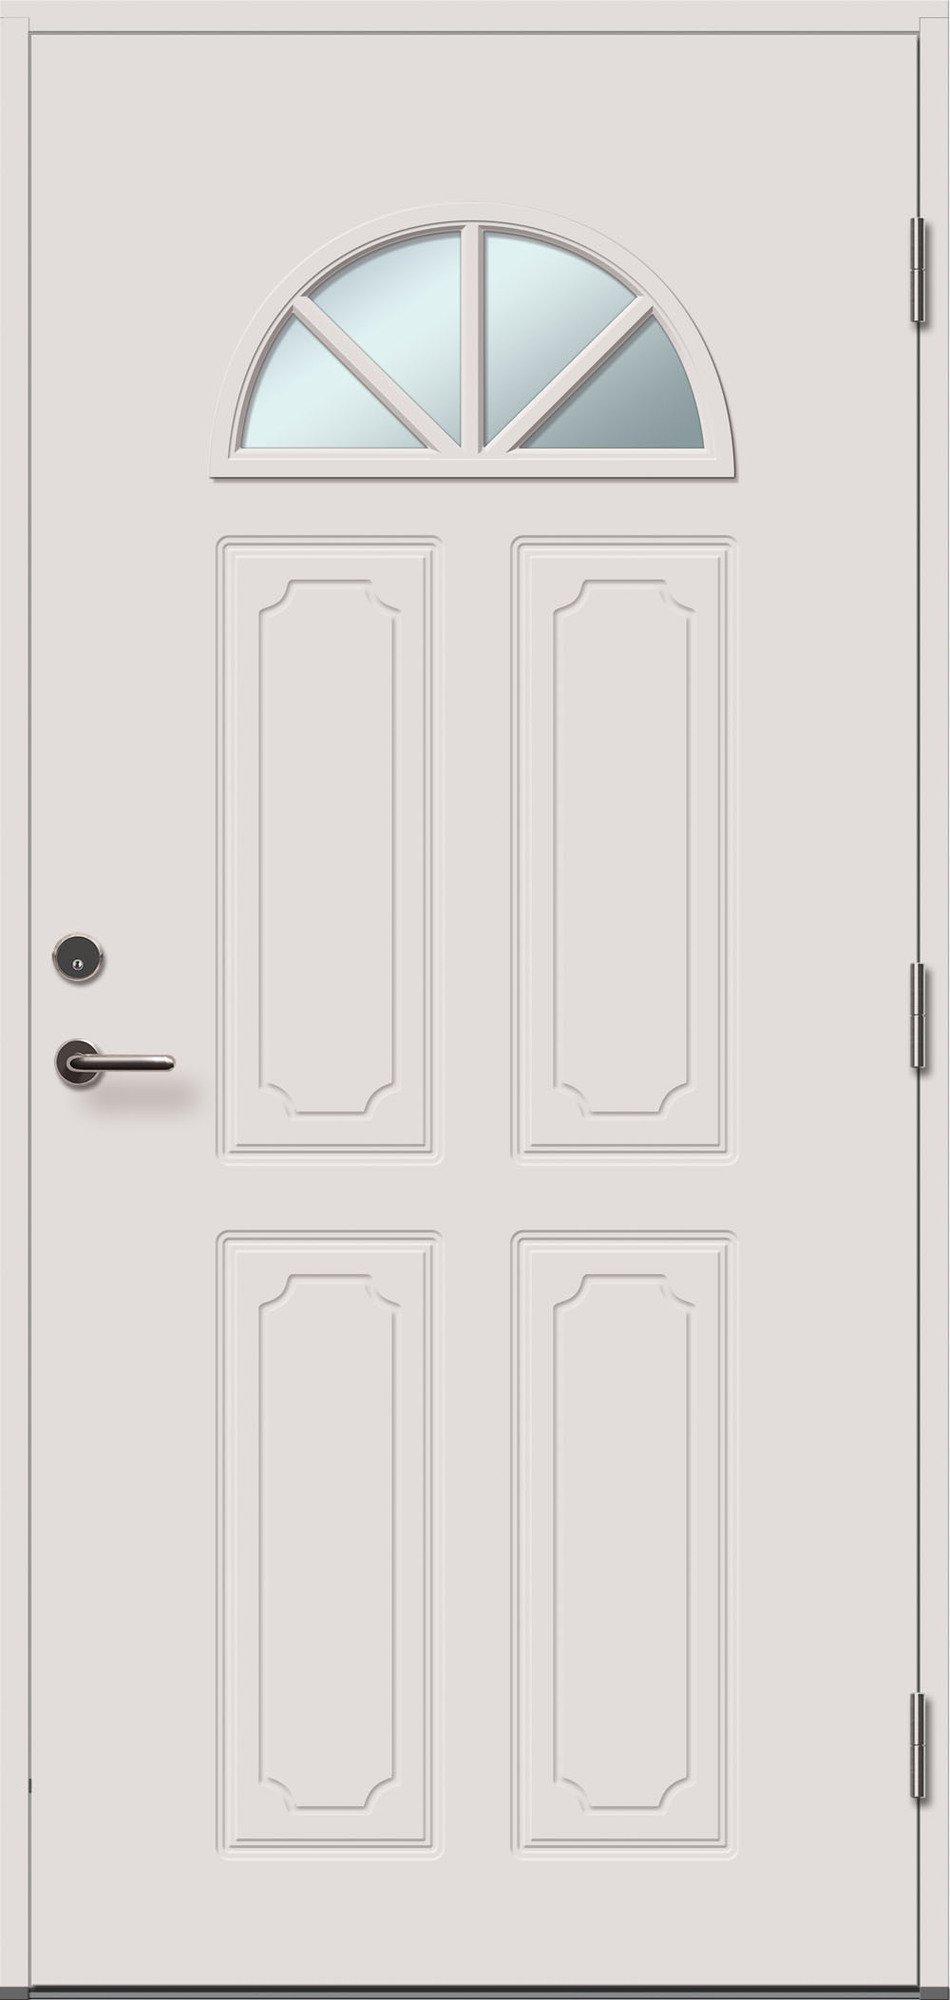 Lauko durys VILJANDI AMALIA 4RK, balta sp., 990 x 2088 mm, kairė